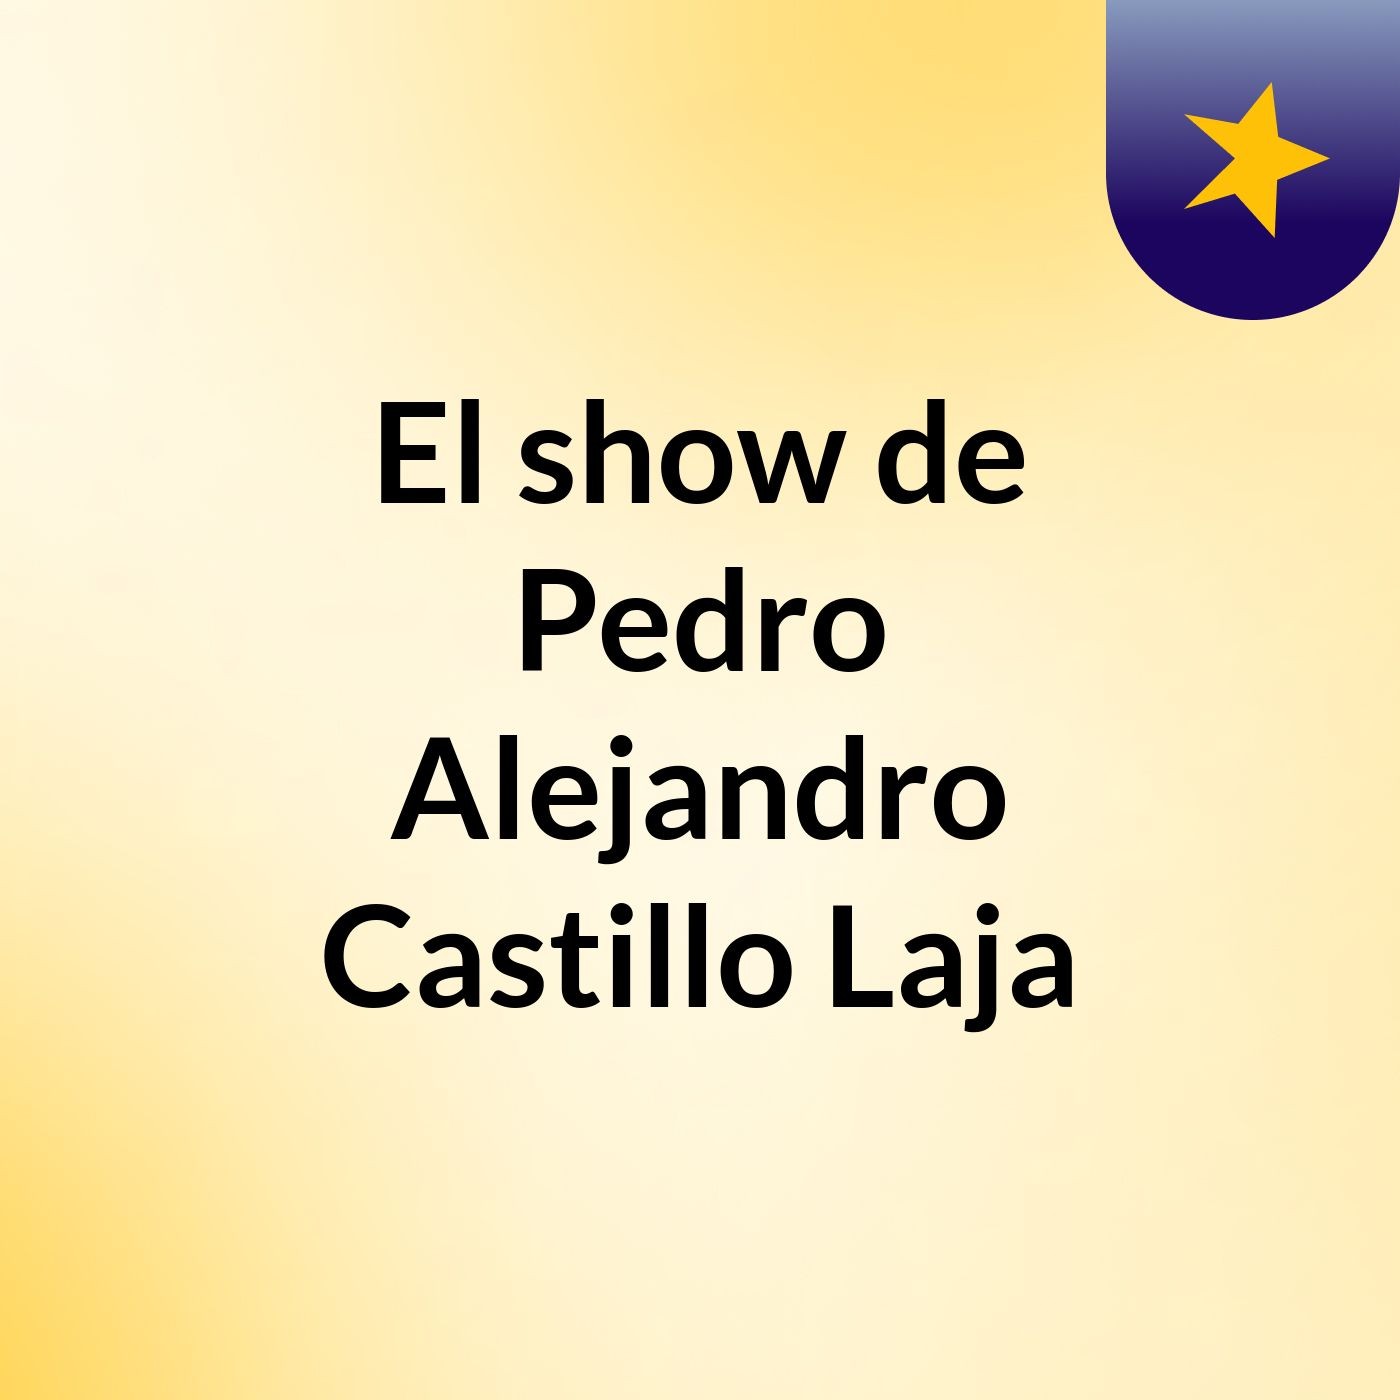 El show de Pedro Alejandro Castillo Laja